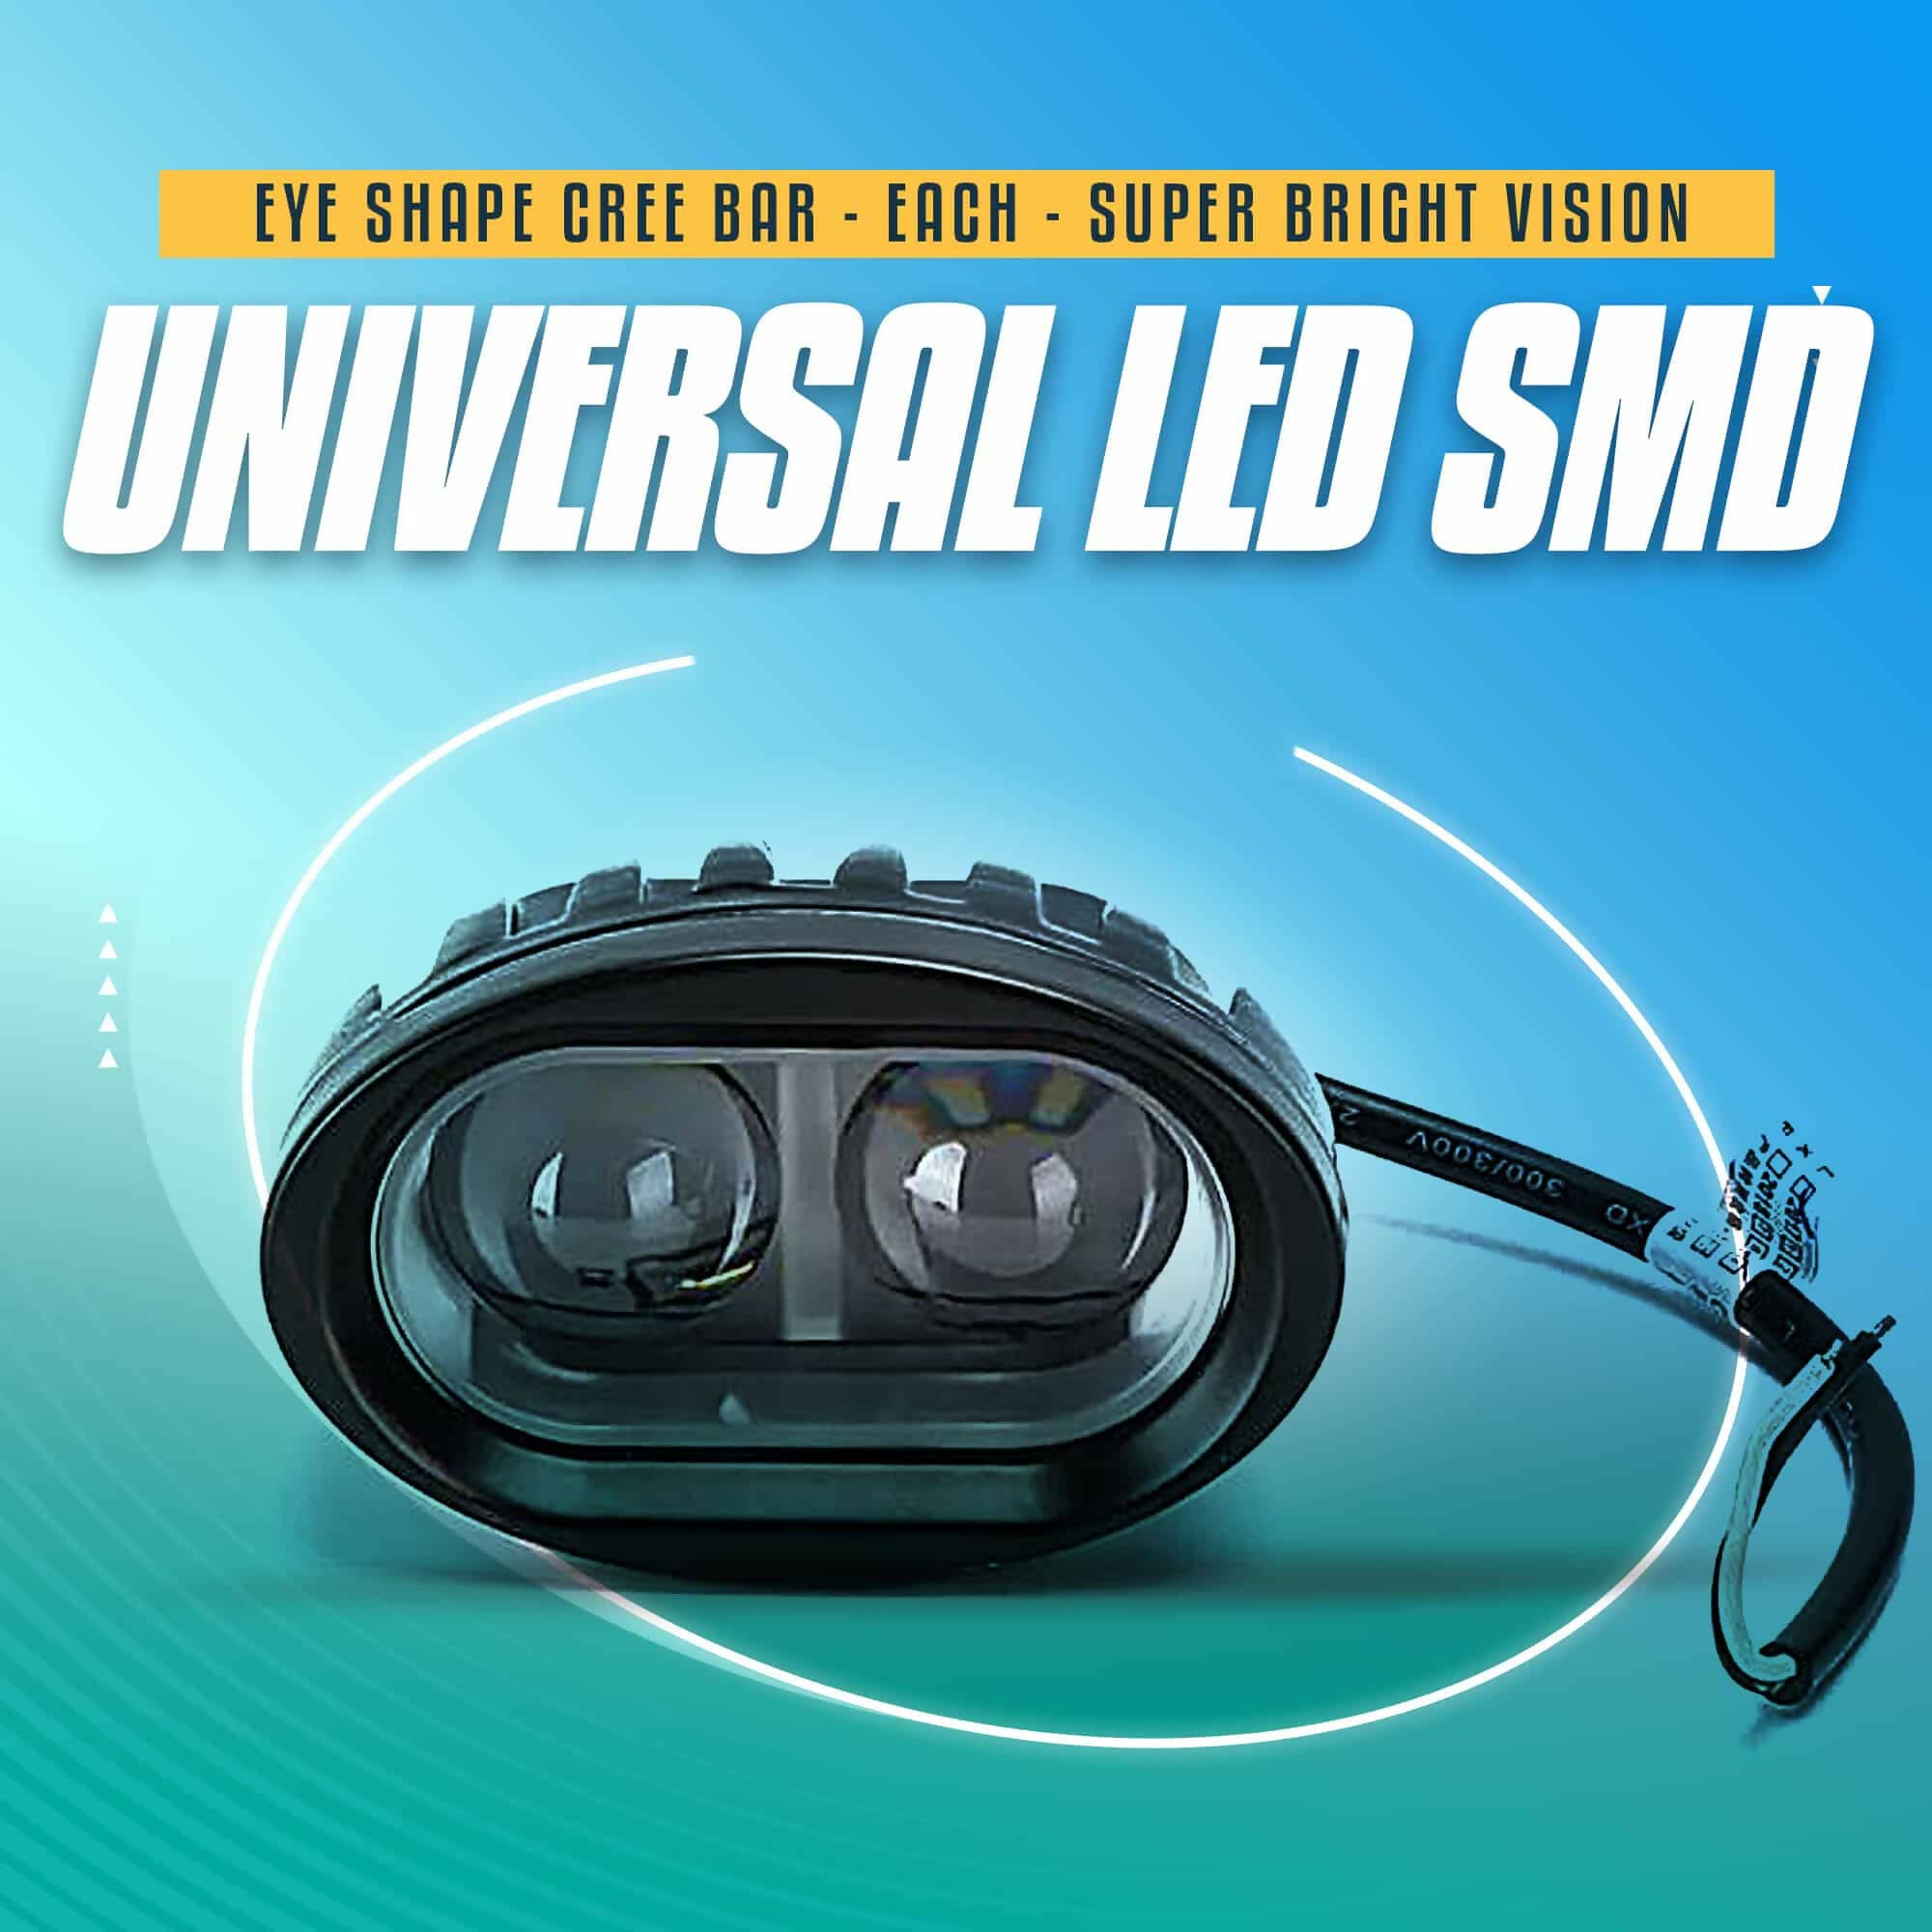 Universal LED SMD Eye Shape Cree Bar - Each - Super Bright Vision